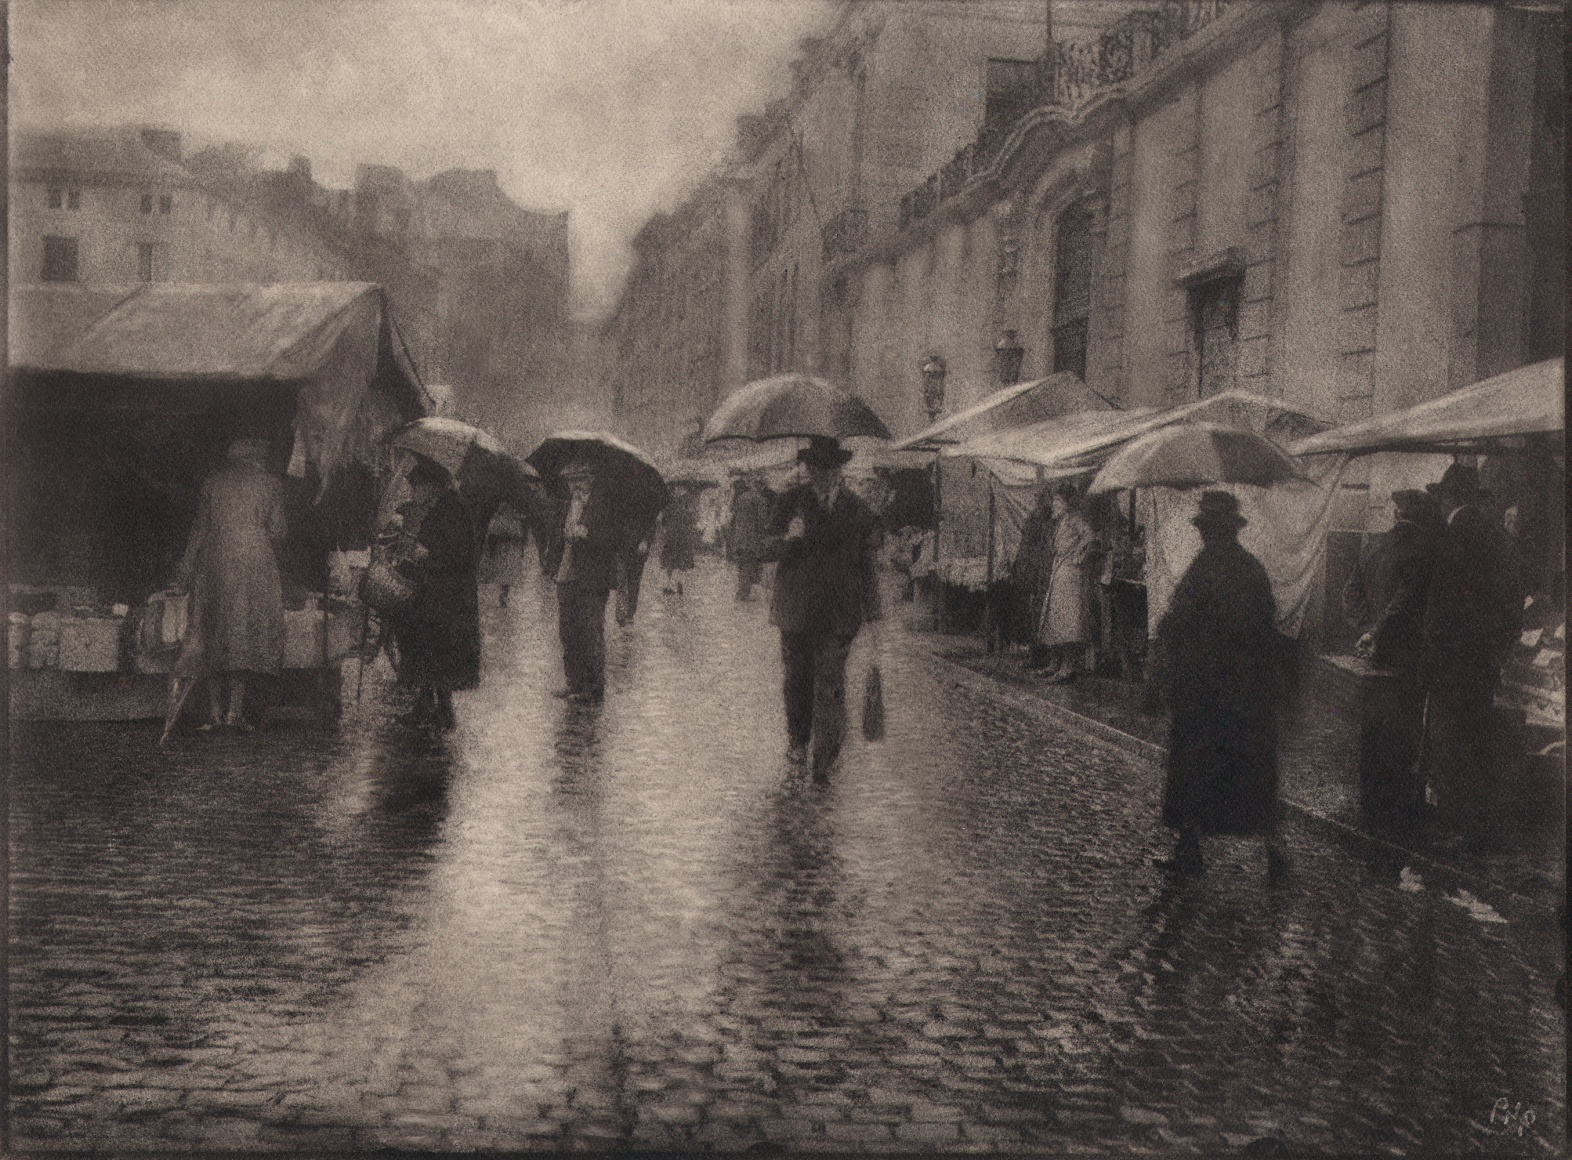 04. L&eacute;onard Misonne, Untitled, c. 1930. Figures with umbrellas walk a wet, cobbled market street. Sepia-toned print.